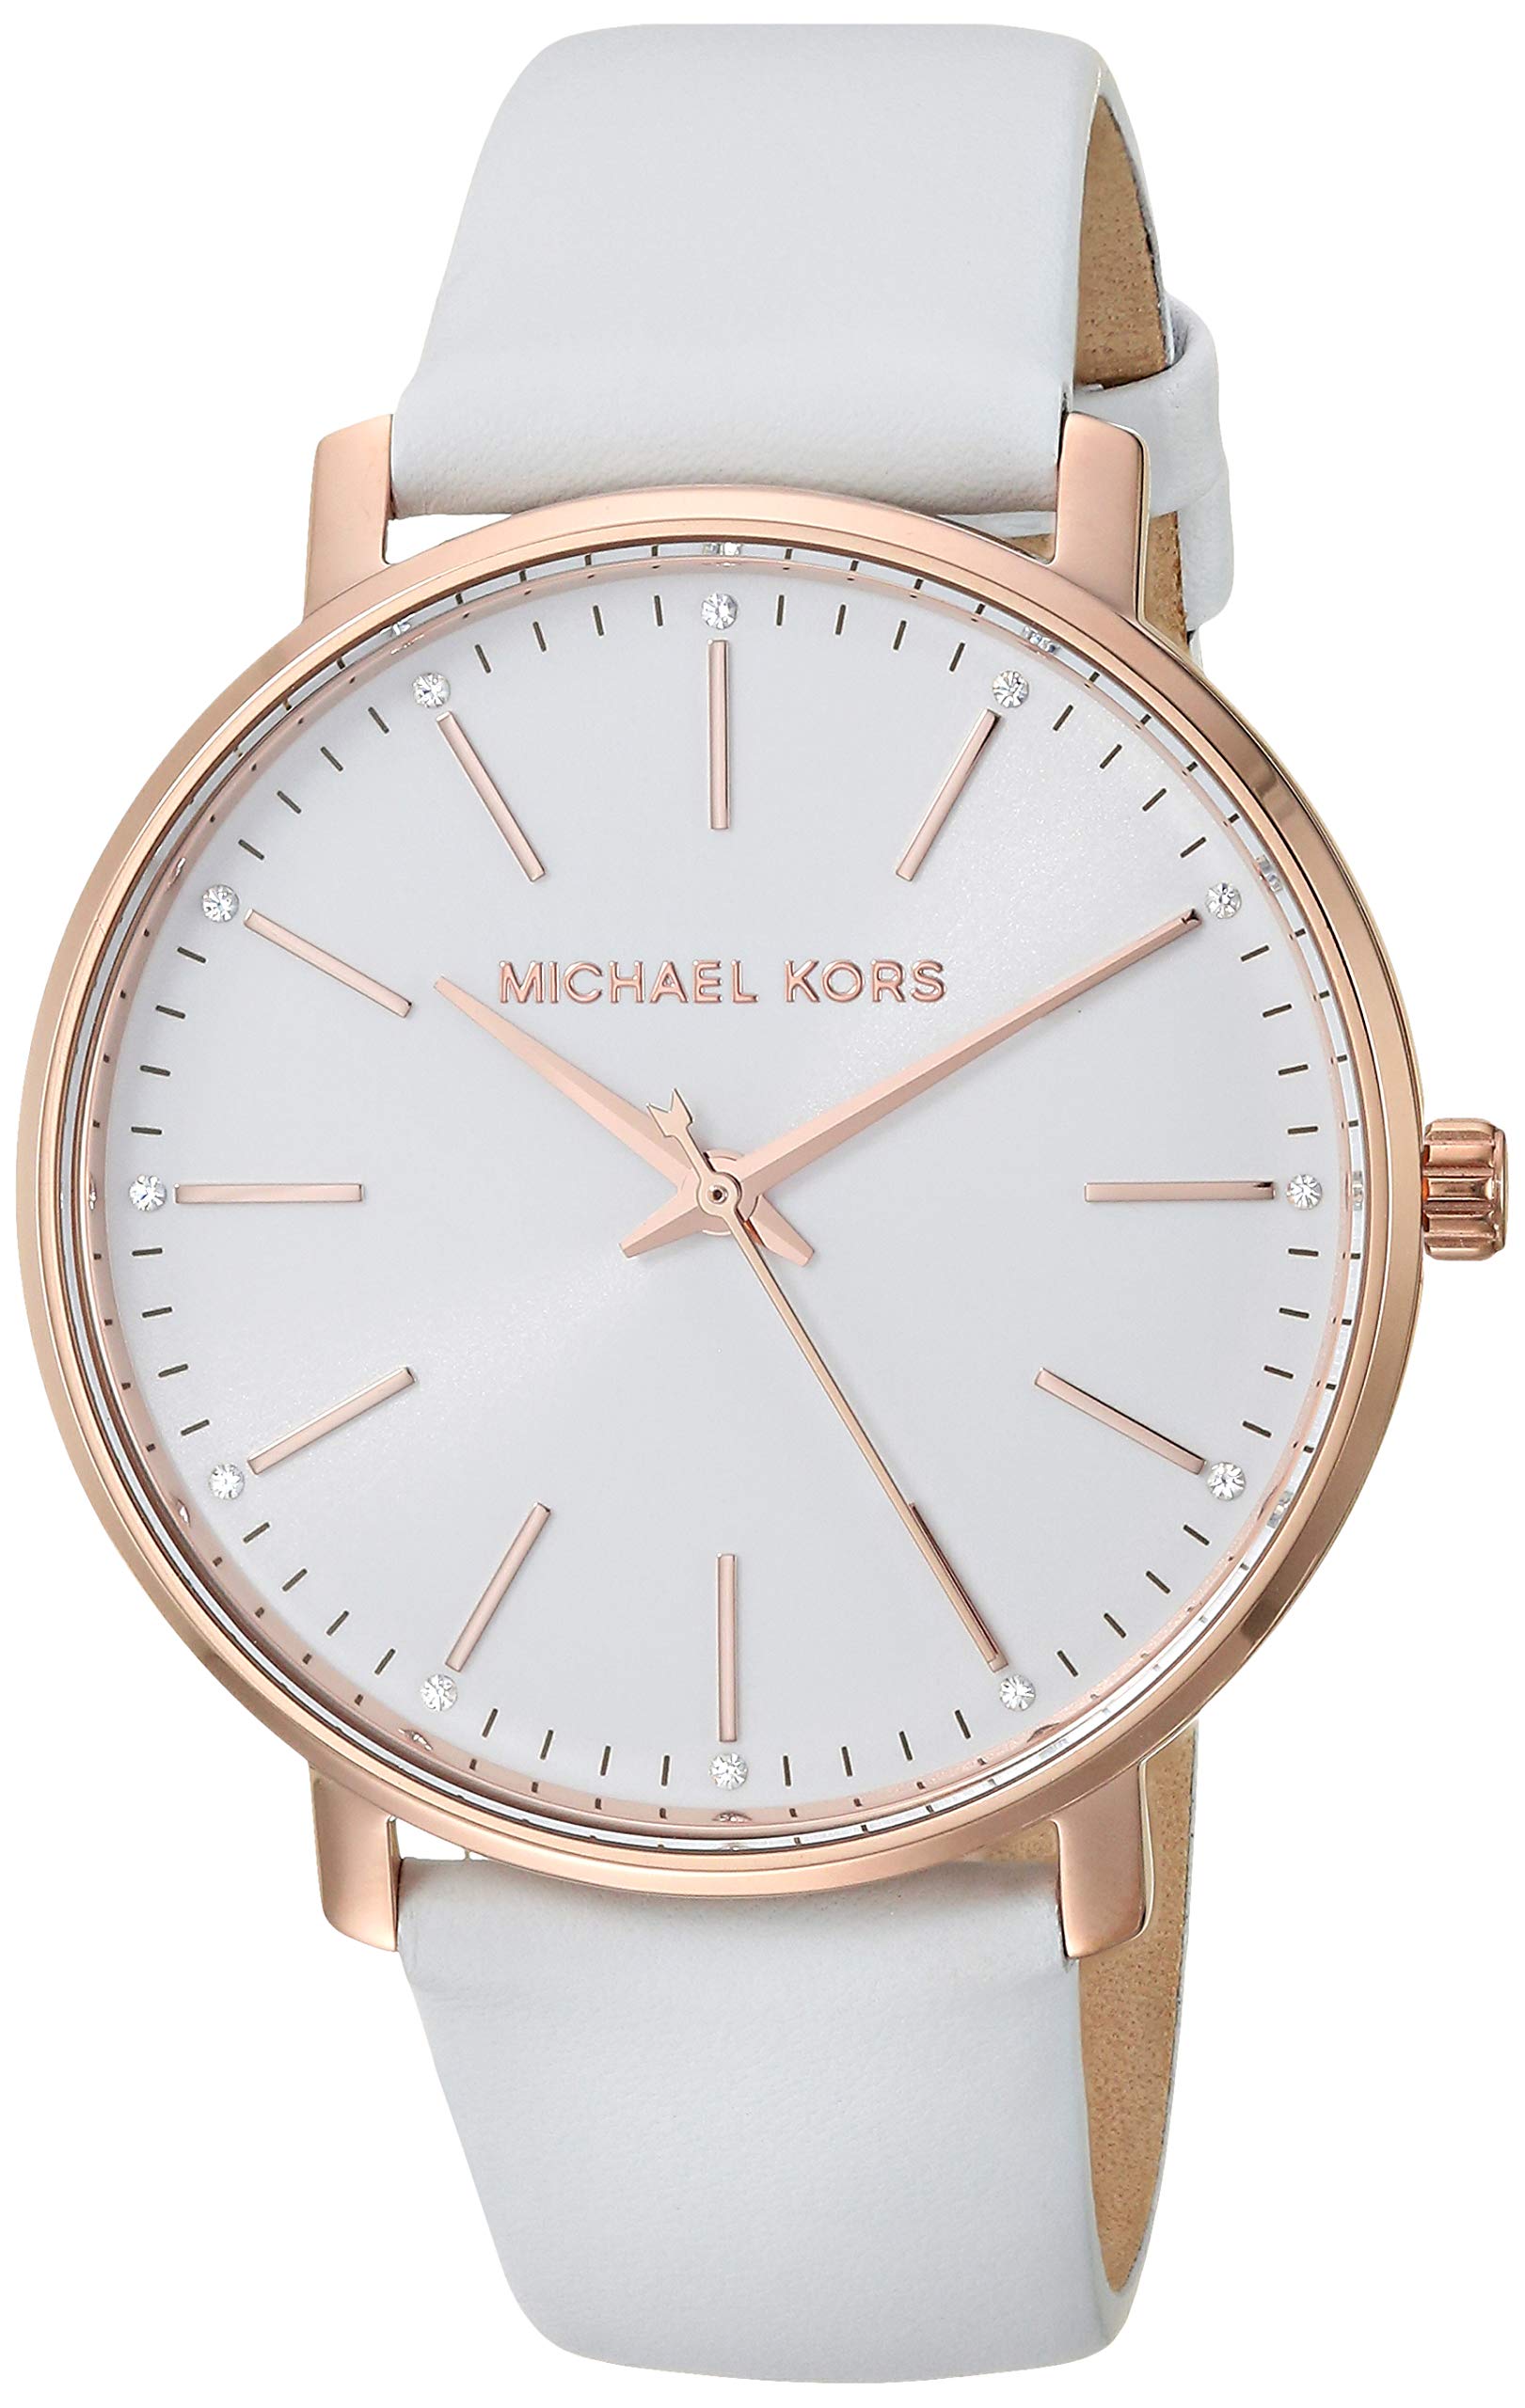 Michael Kors Women's Pyper Stainless Steel Quartz Watch with Leather Strap, White, 18 (Model: MK2800)